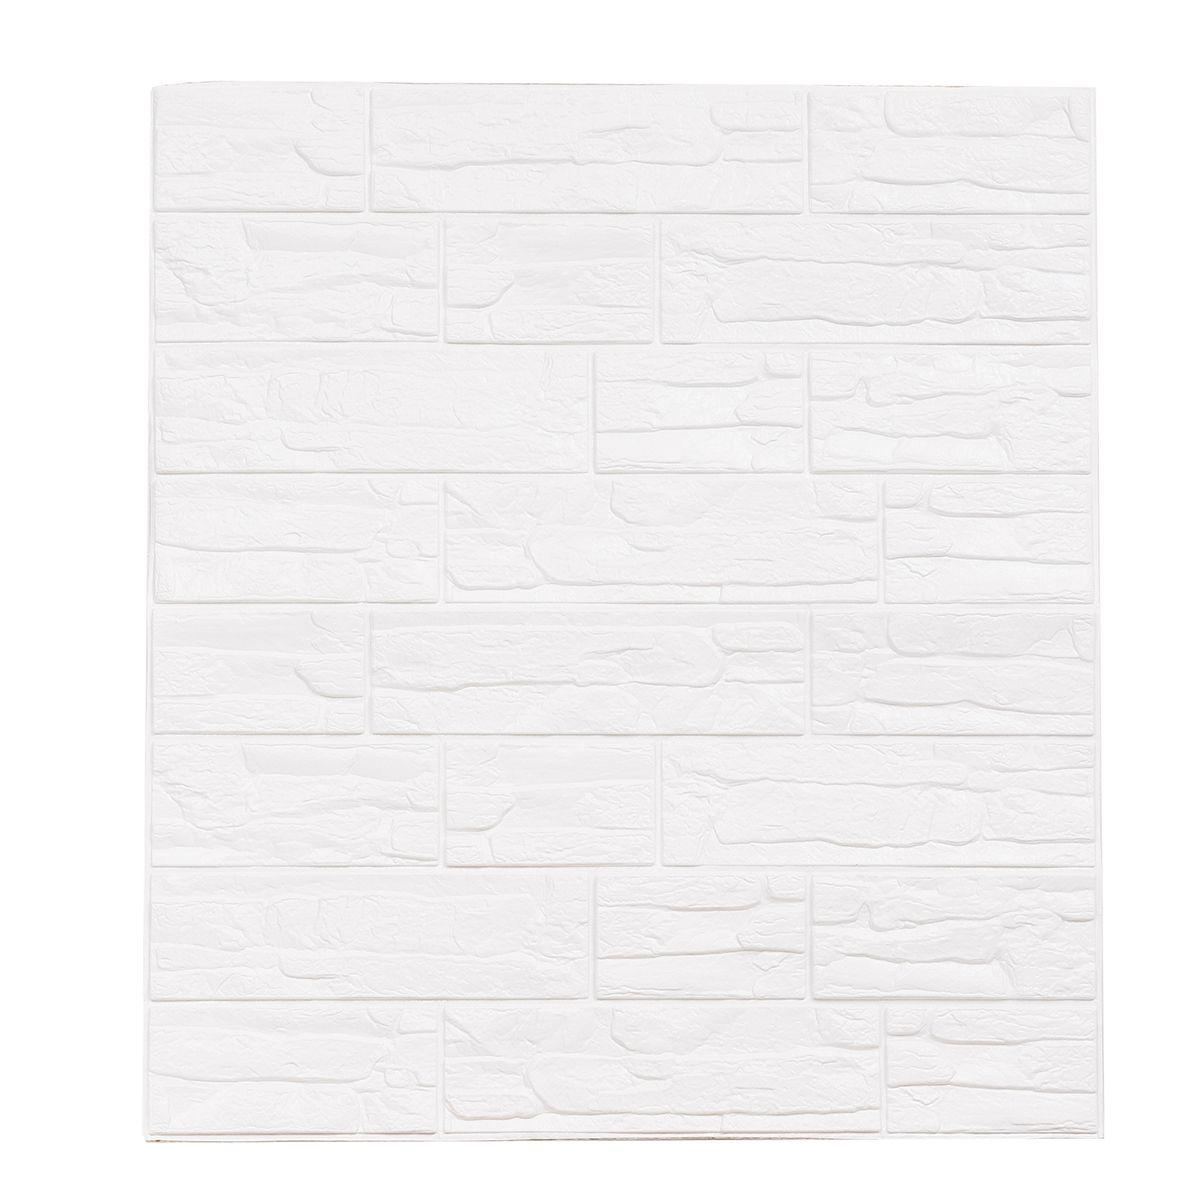 10Pcs-Set-3D-Brick-Wall-Stickers-Panels-Self-Adhesive-Decals-Bedroom-Home-Decoration-1715678